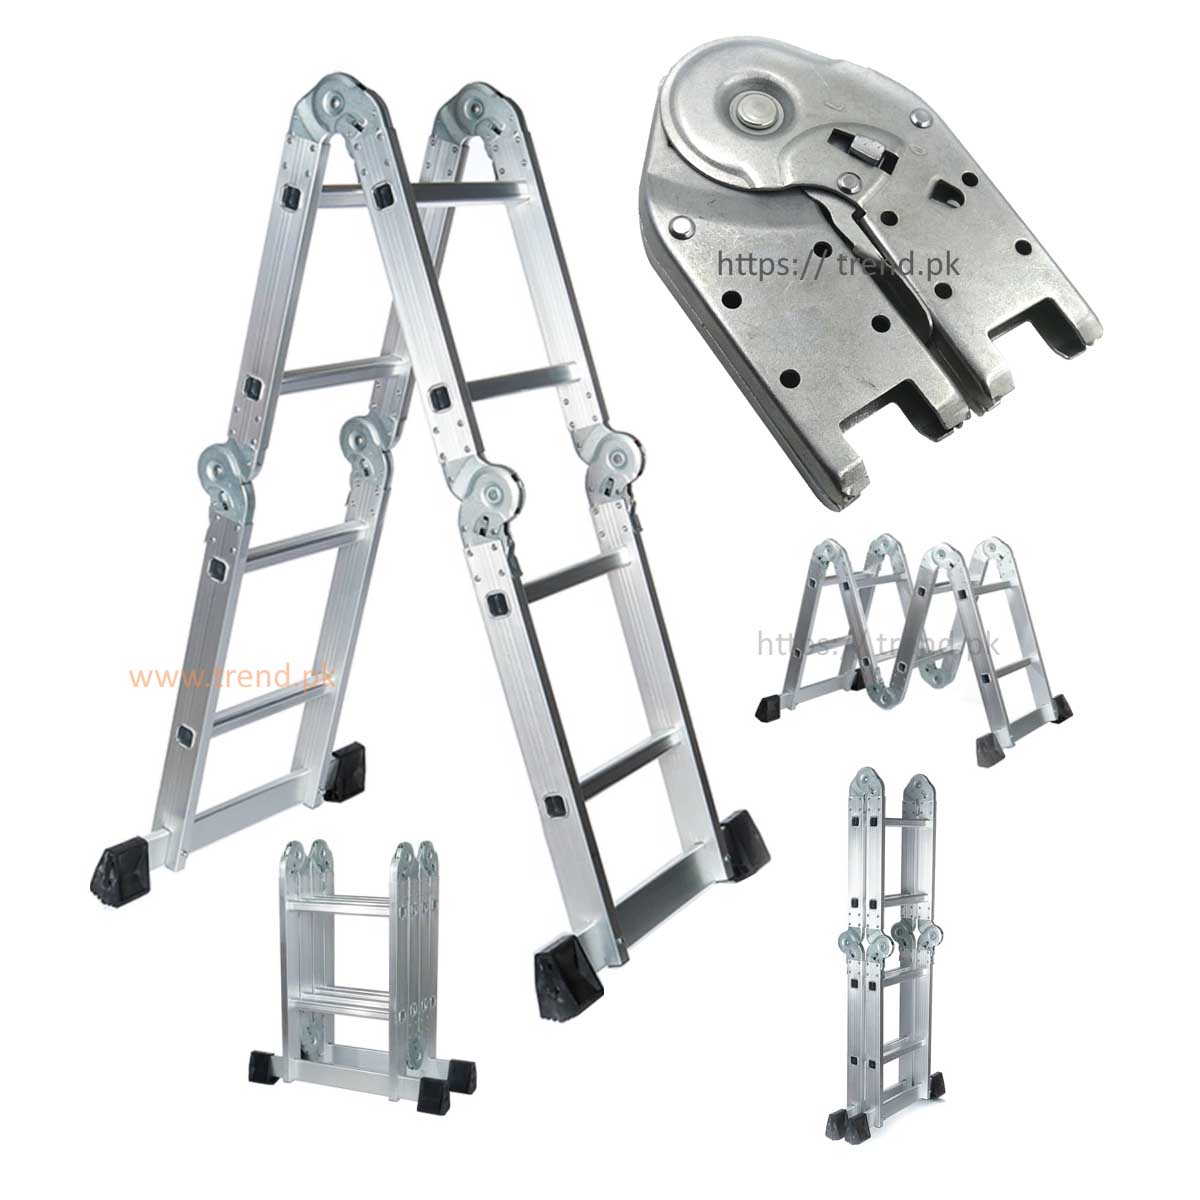 multipurpose ladder